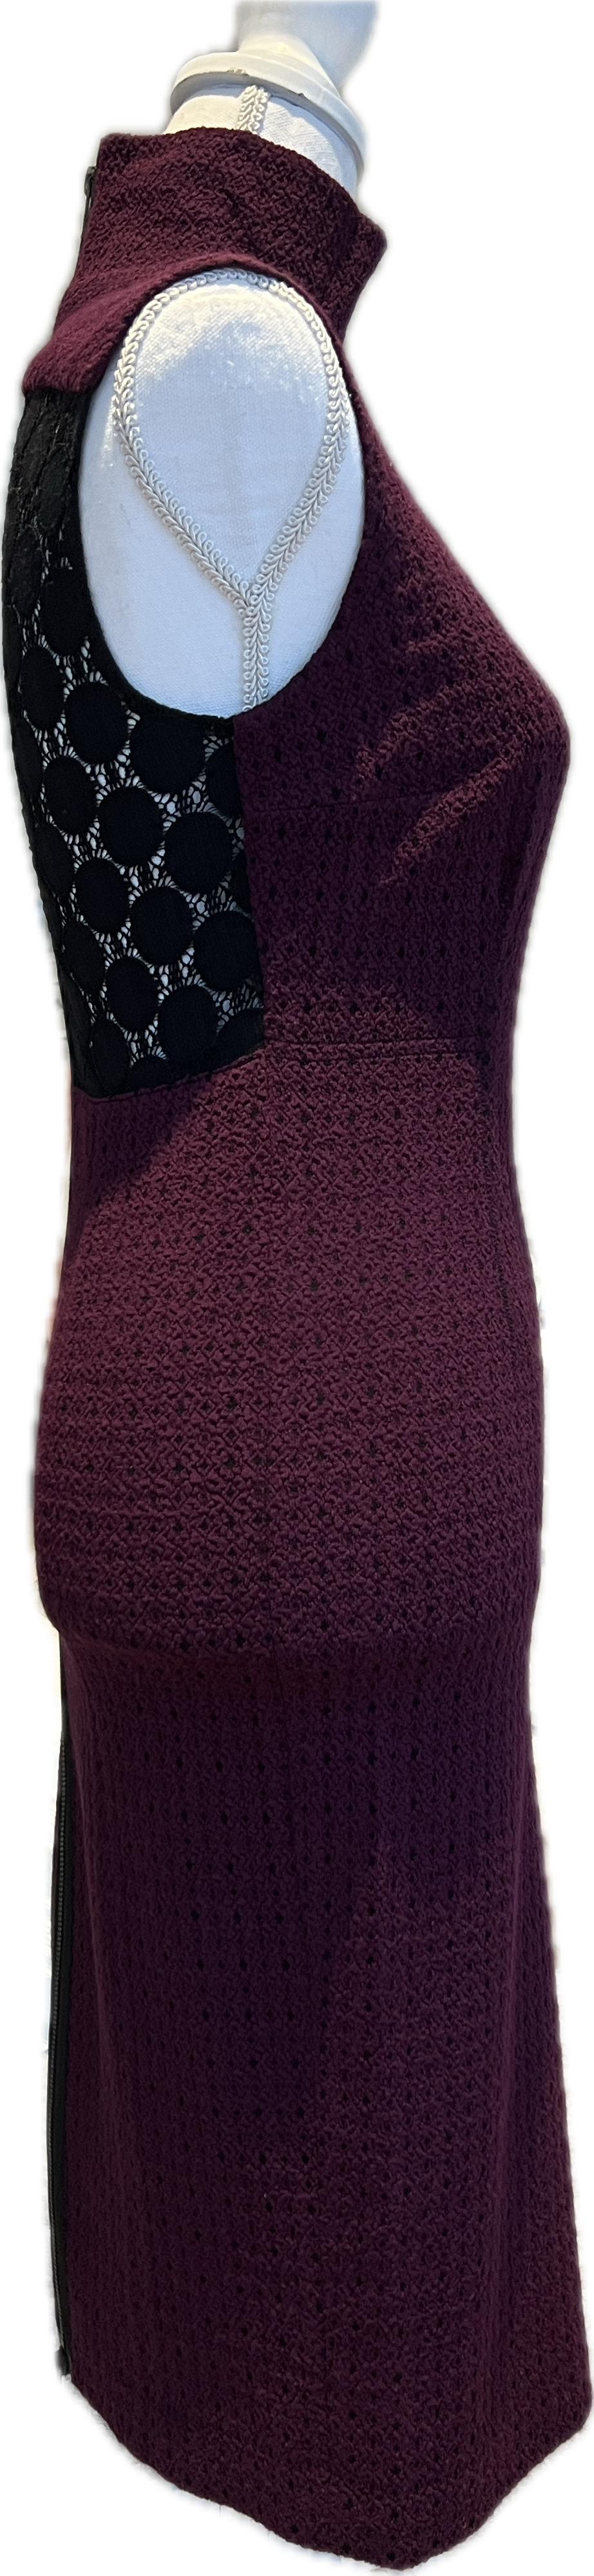 Tracy Reece Purple Stretch Lace Dress, S